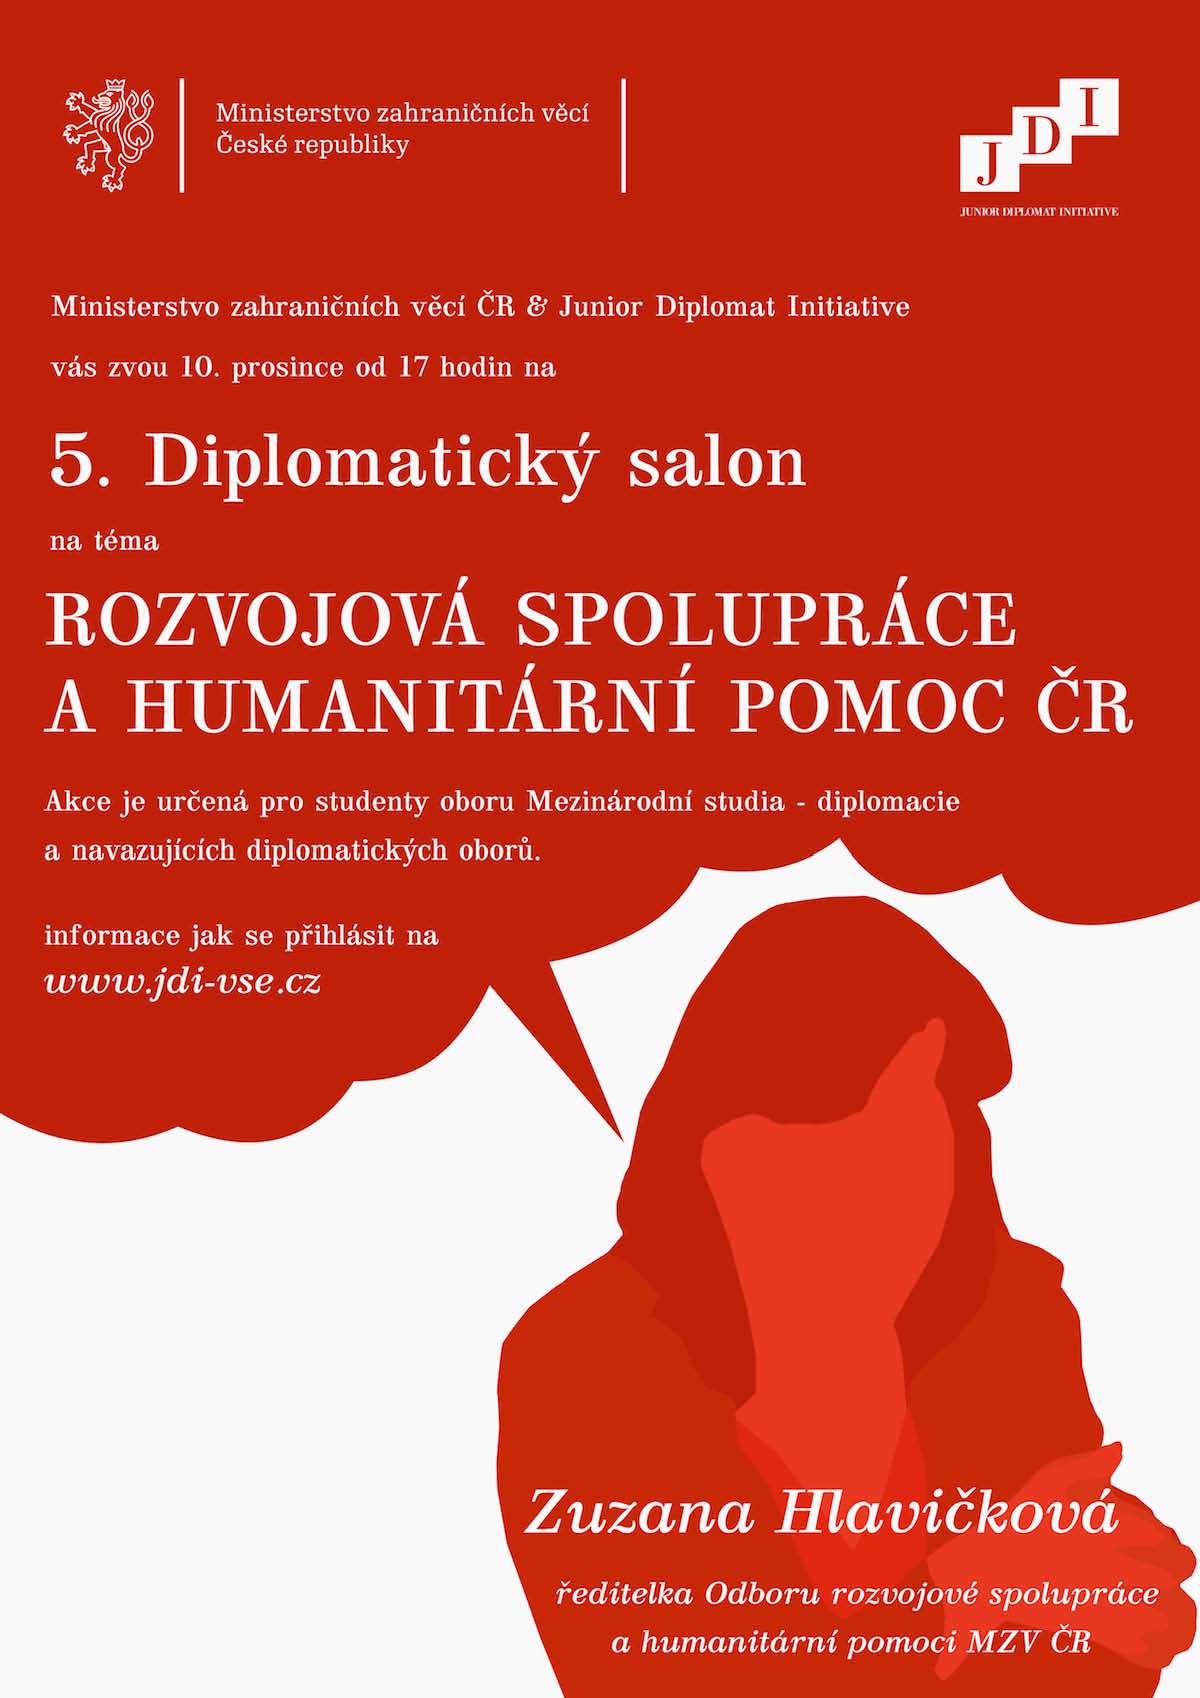 5. Diplomatický salon